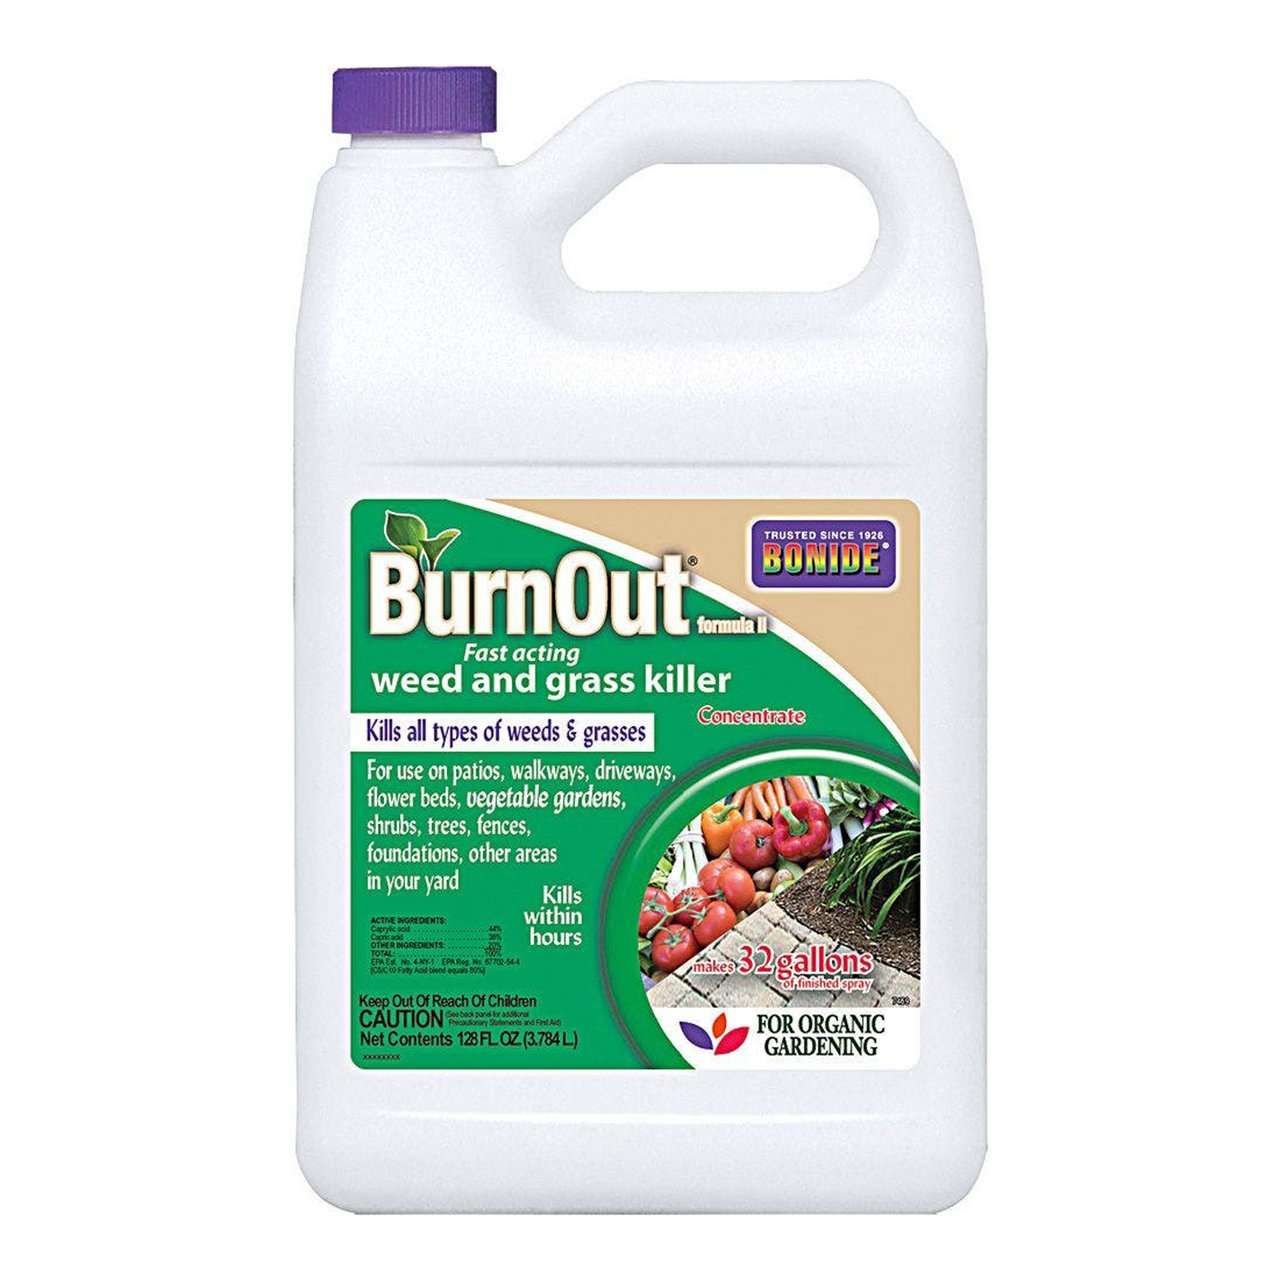 Burnout Organic Weed and Grass Killer Good Nature